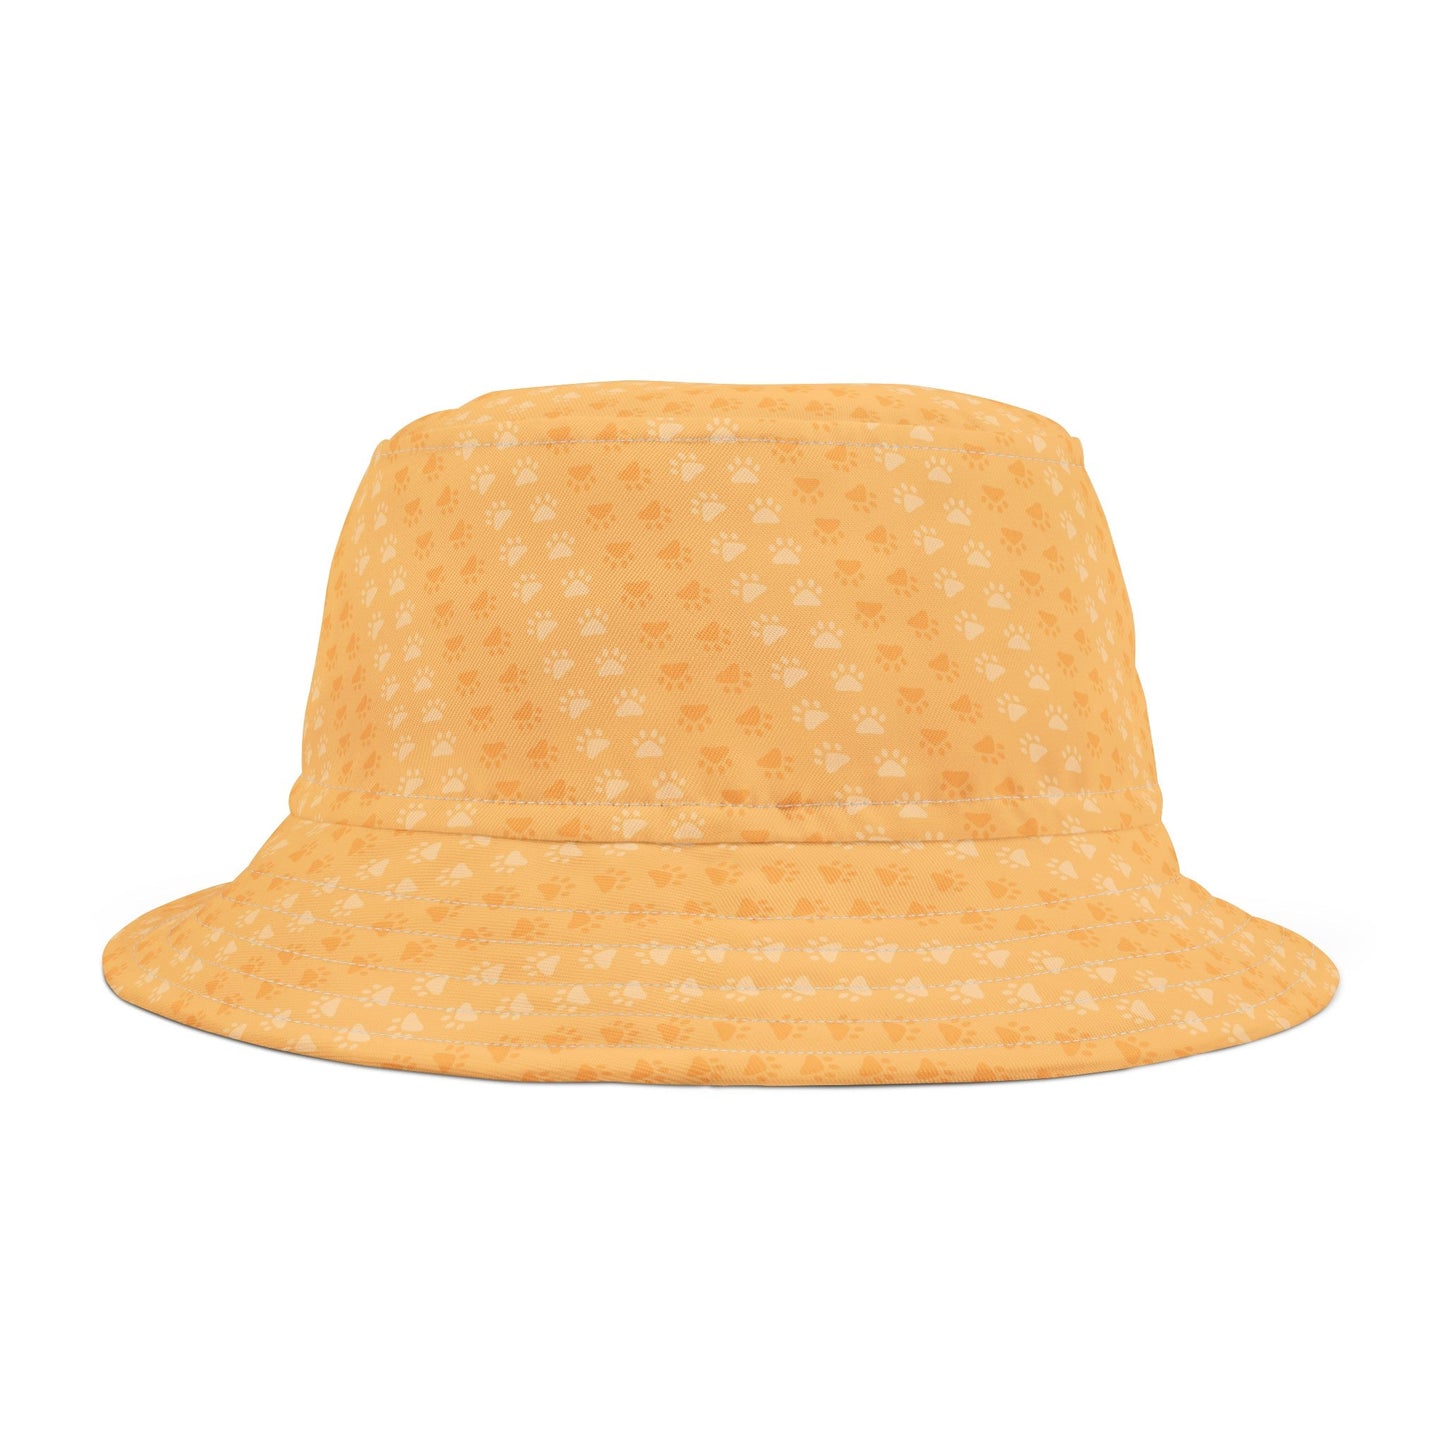 Gold Paws Bucket Hat - Hats - Epileptic Al’s Shop